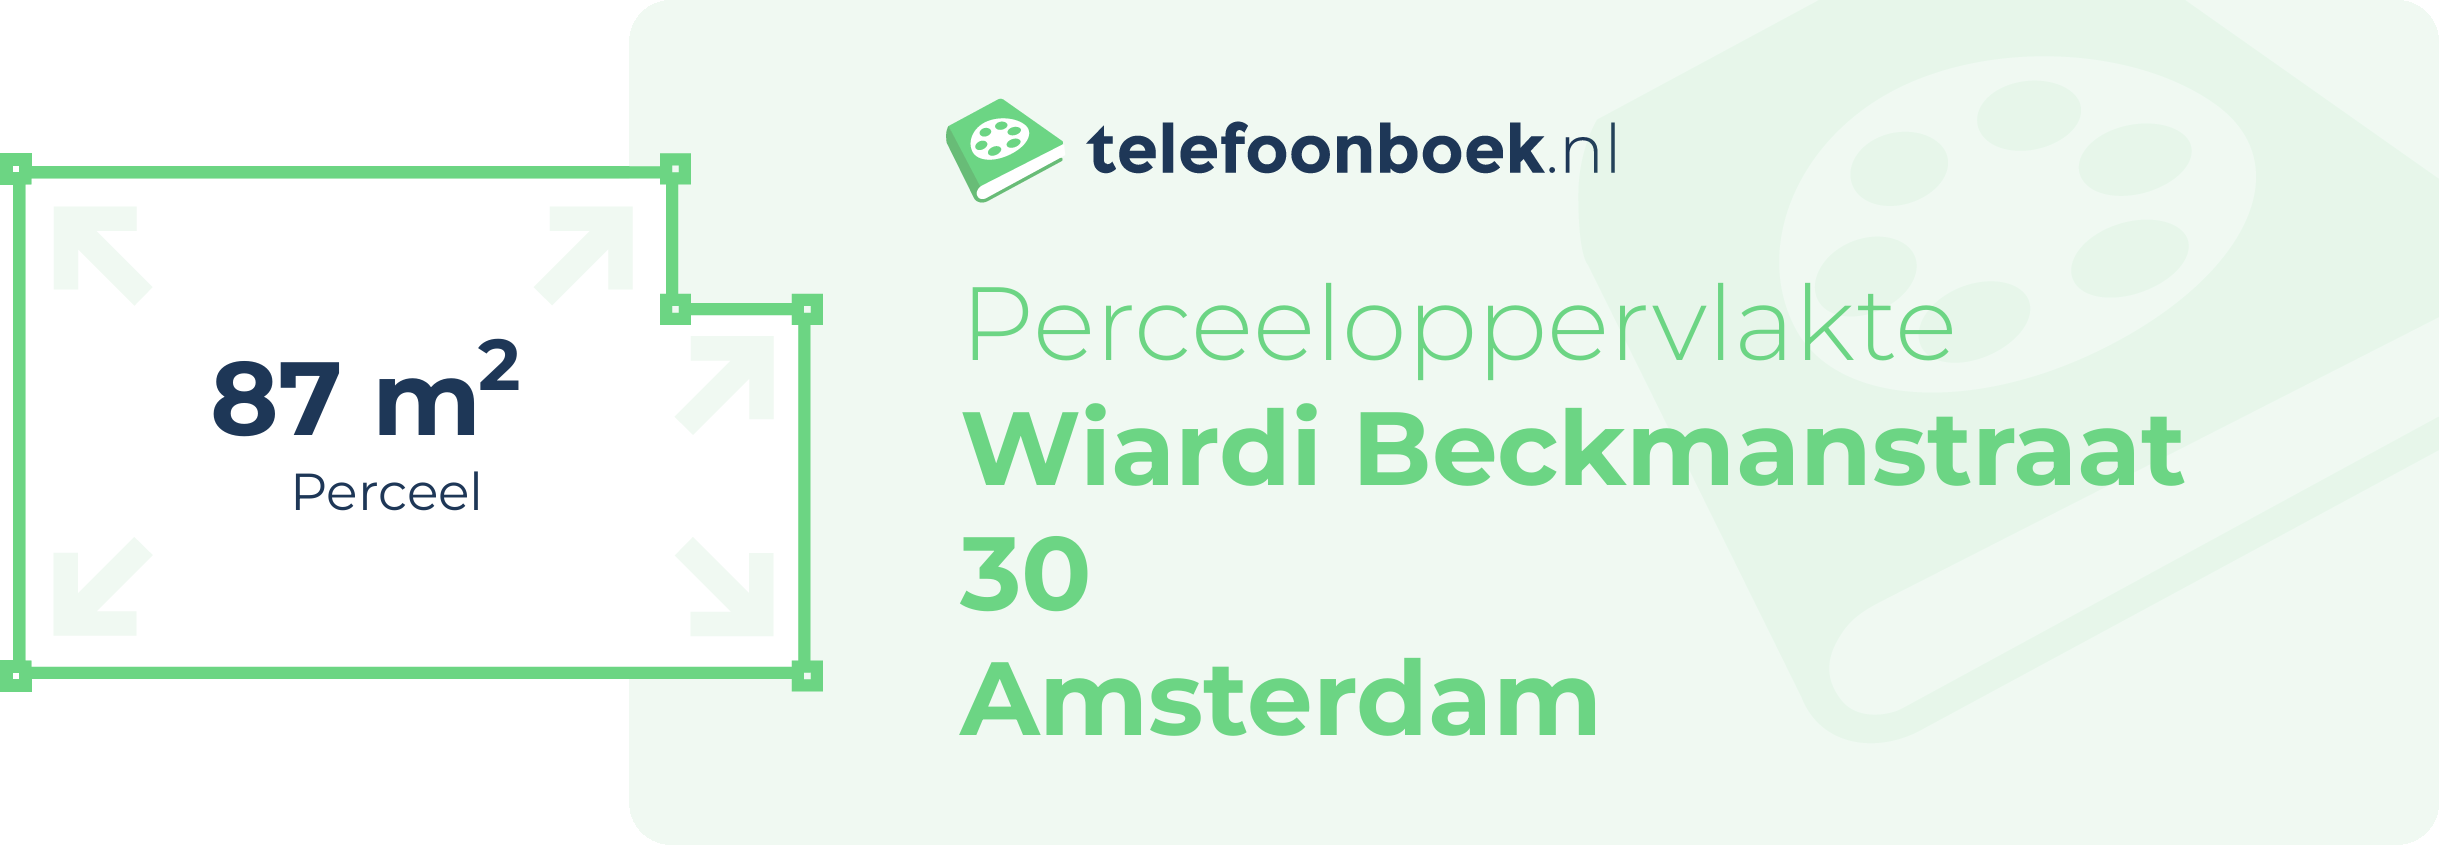 Perceeloppervlakte Wiardi Beckmanstraat 30 Amsterdam